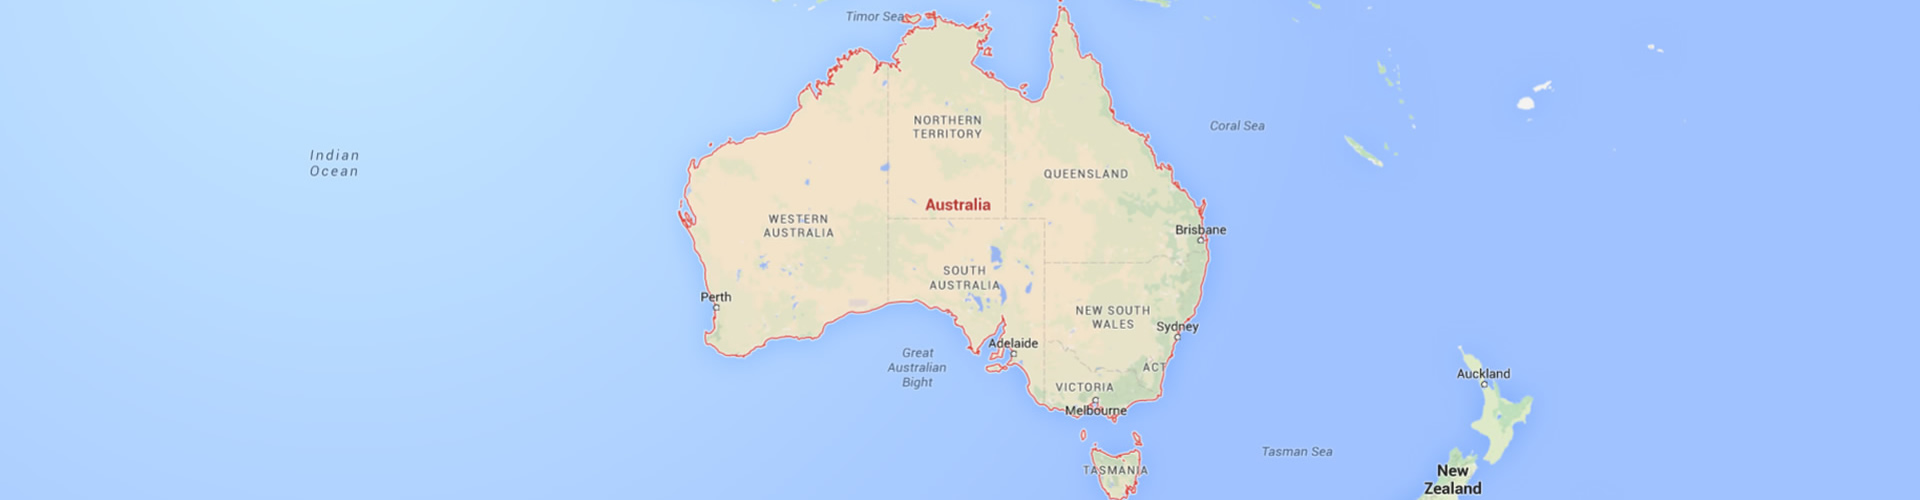 Australie Carte